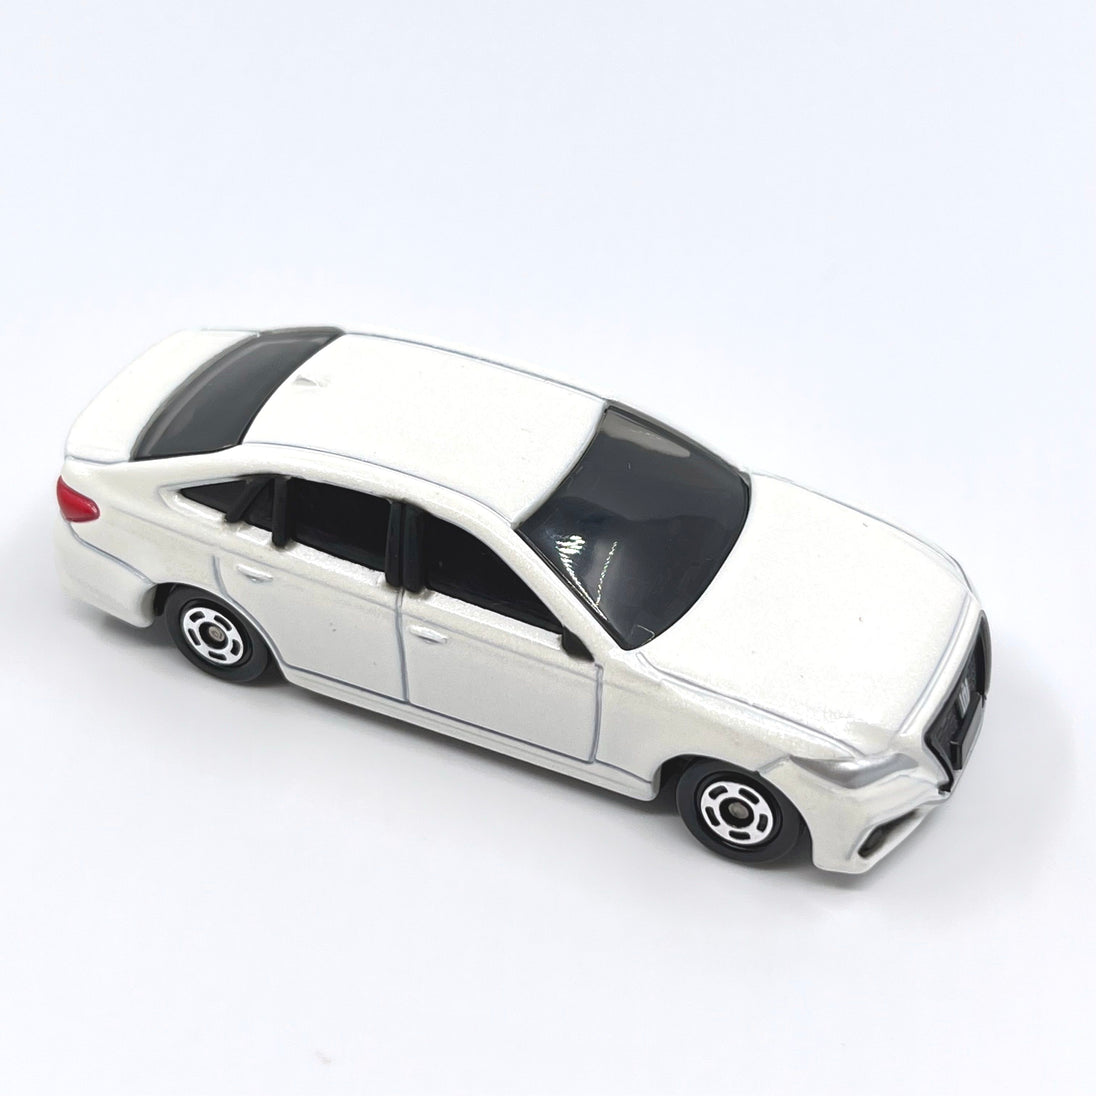 1:66 Toyota Crown Alloy Tomica Diecast Car Model by Takara Tomy